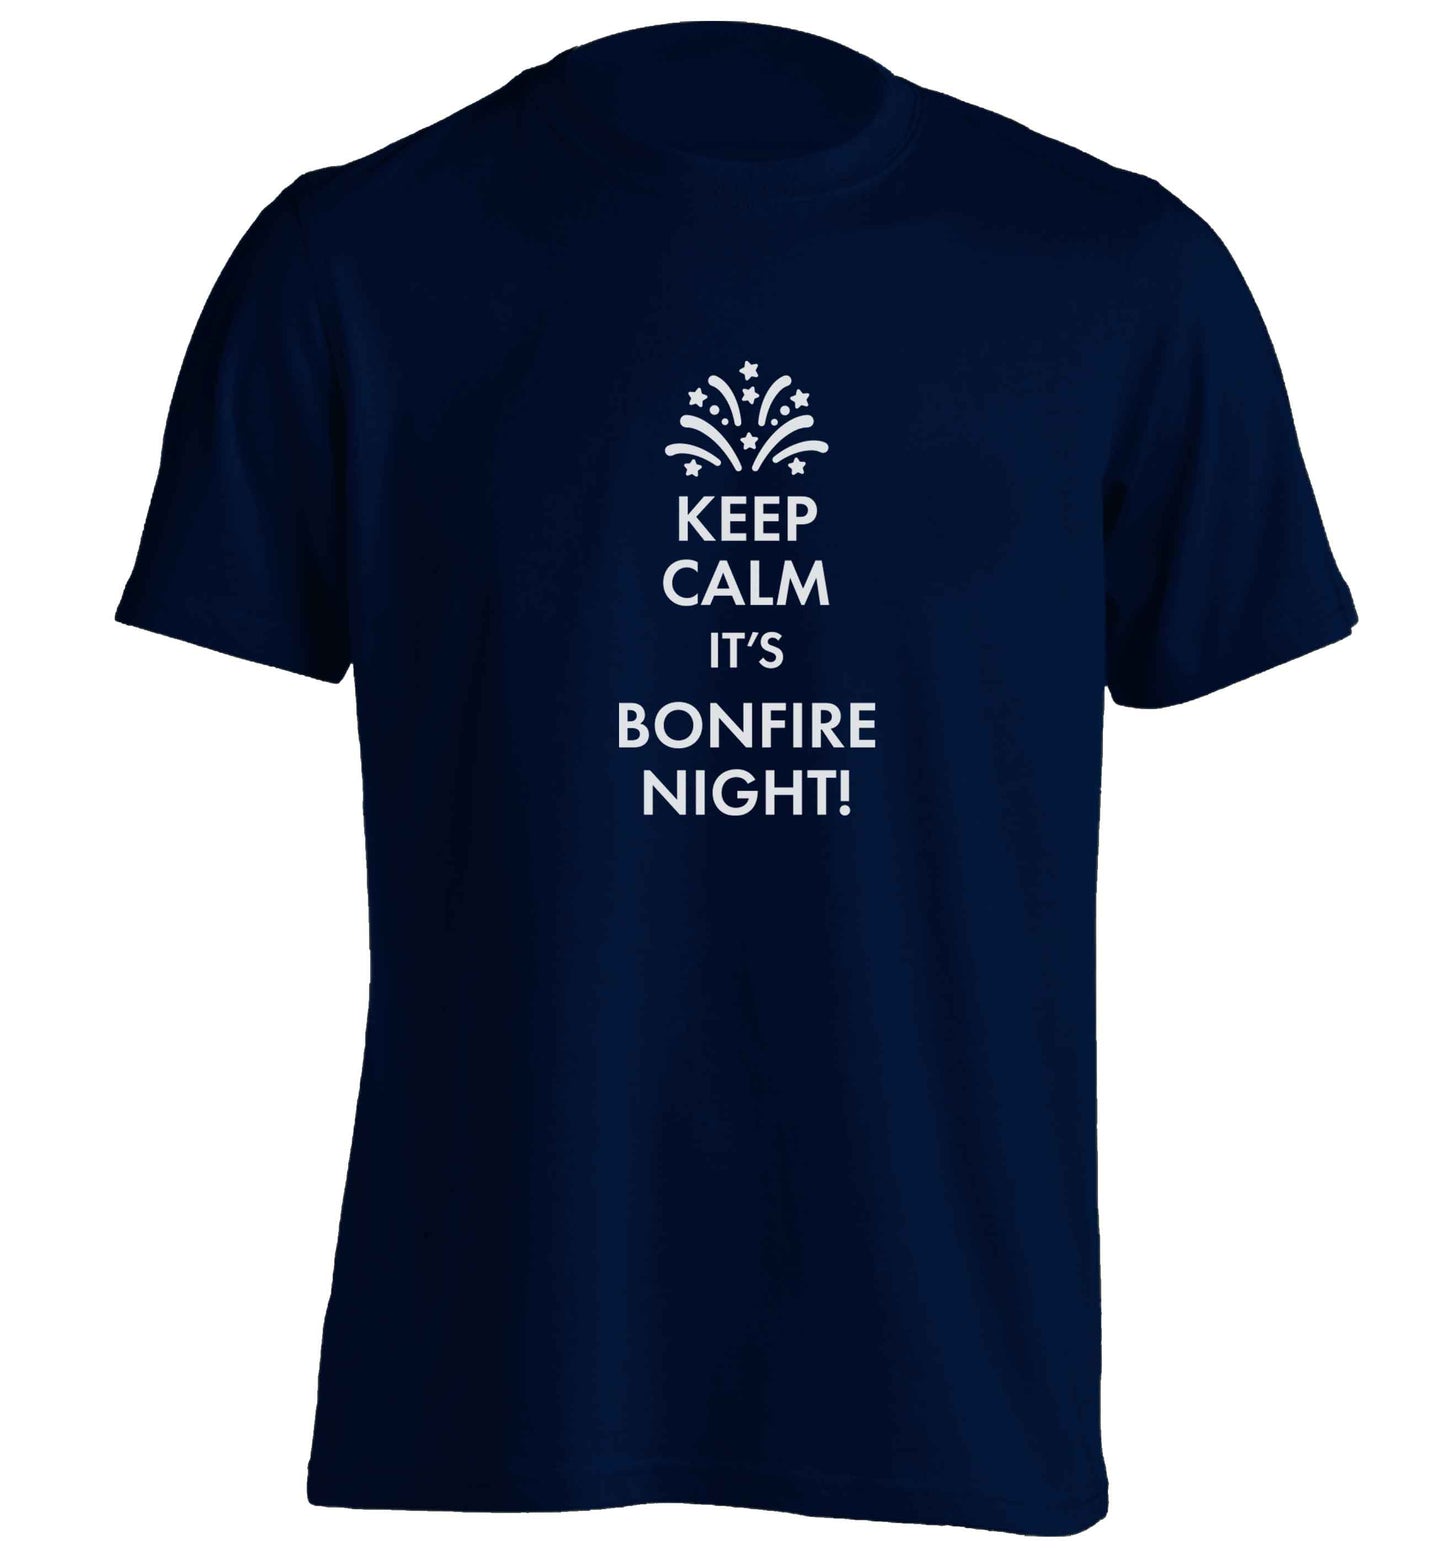 Keep calm its bonfire night adults unisex navy Tshirt 2XL